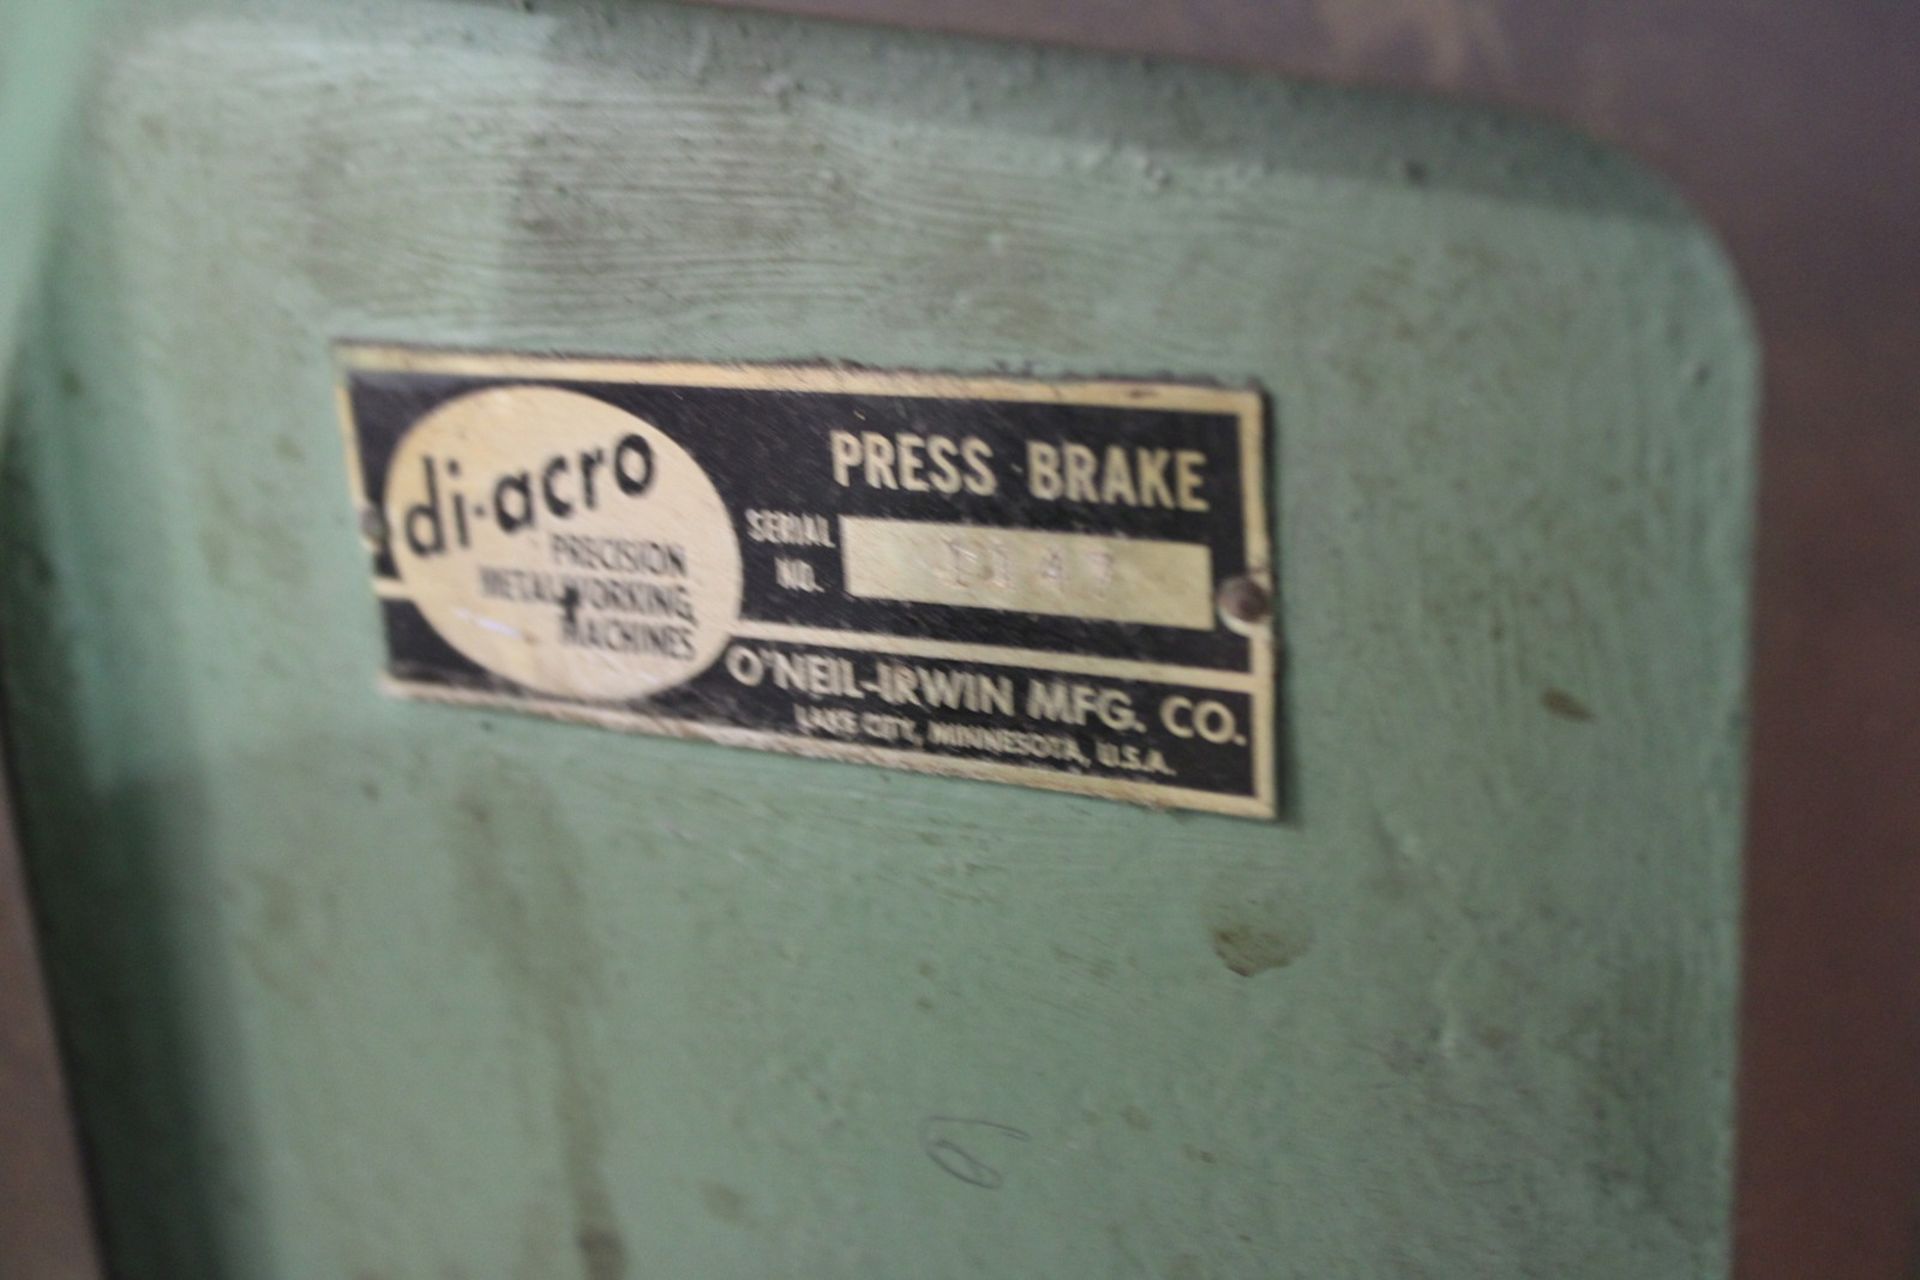 DIACRO 24” NO. 1 HAND PRESS BRAKE: S/N 1147; MOUNTED ON TABLE - Image 4 of 4